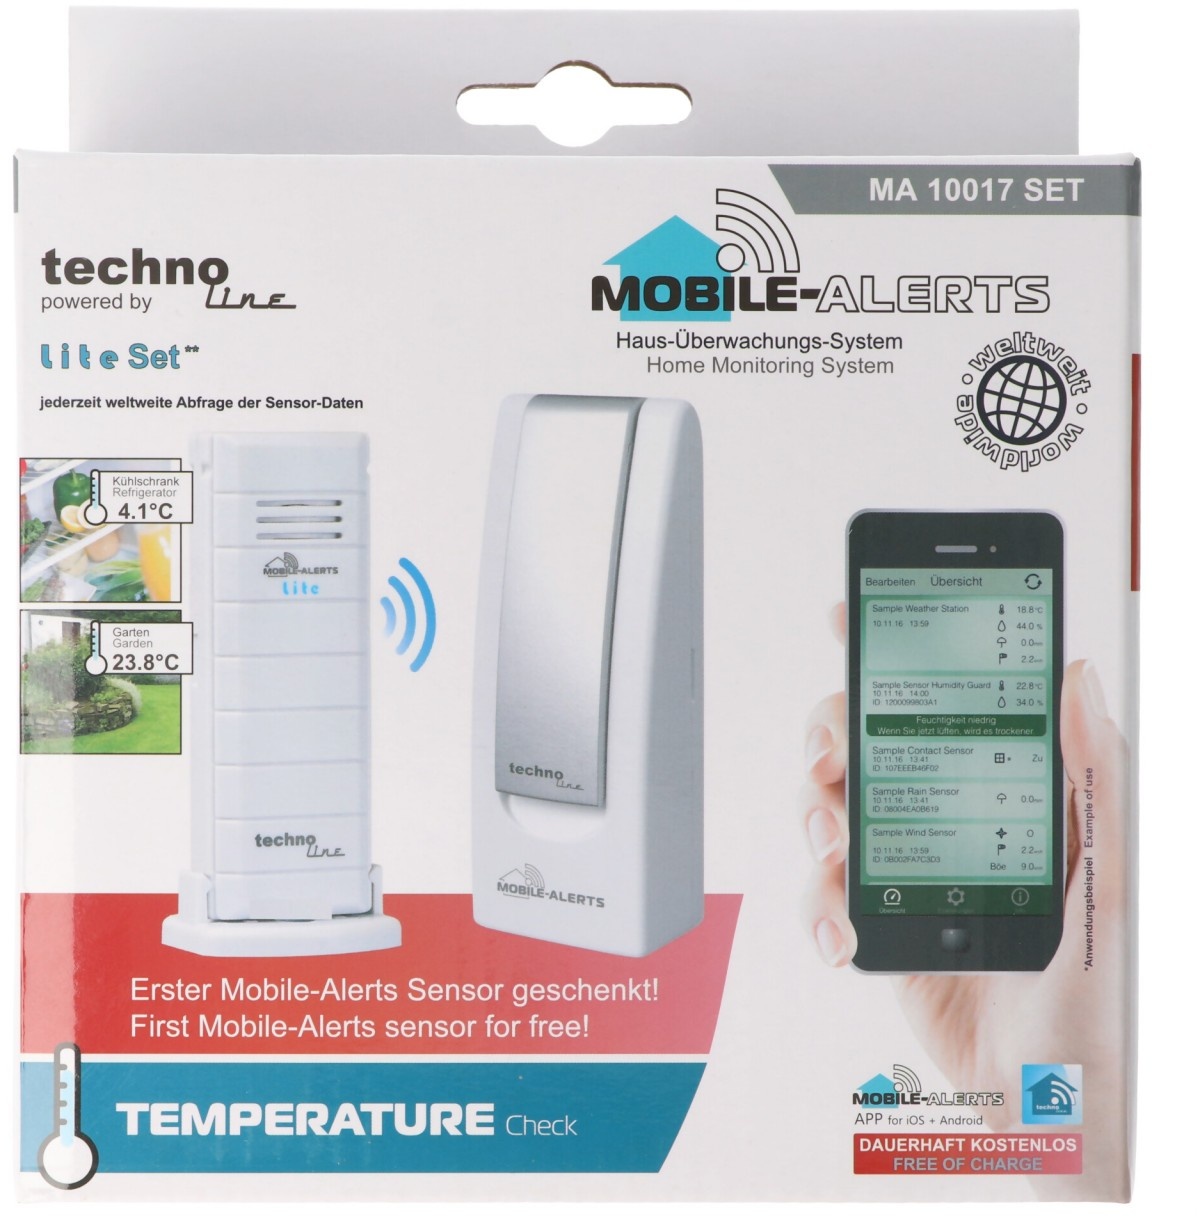 Technoline Mobile Alerts MA 10017 Set Gateway Basisstation MA 10000 + MA 10110 Temperatursensor